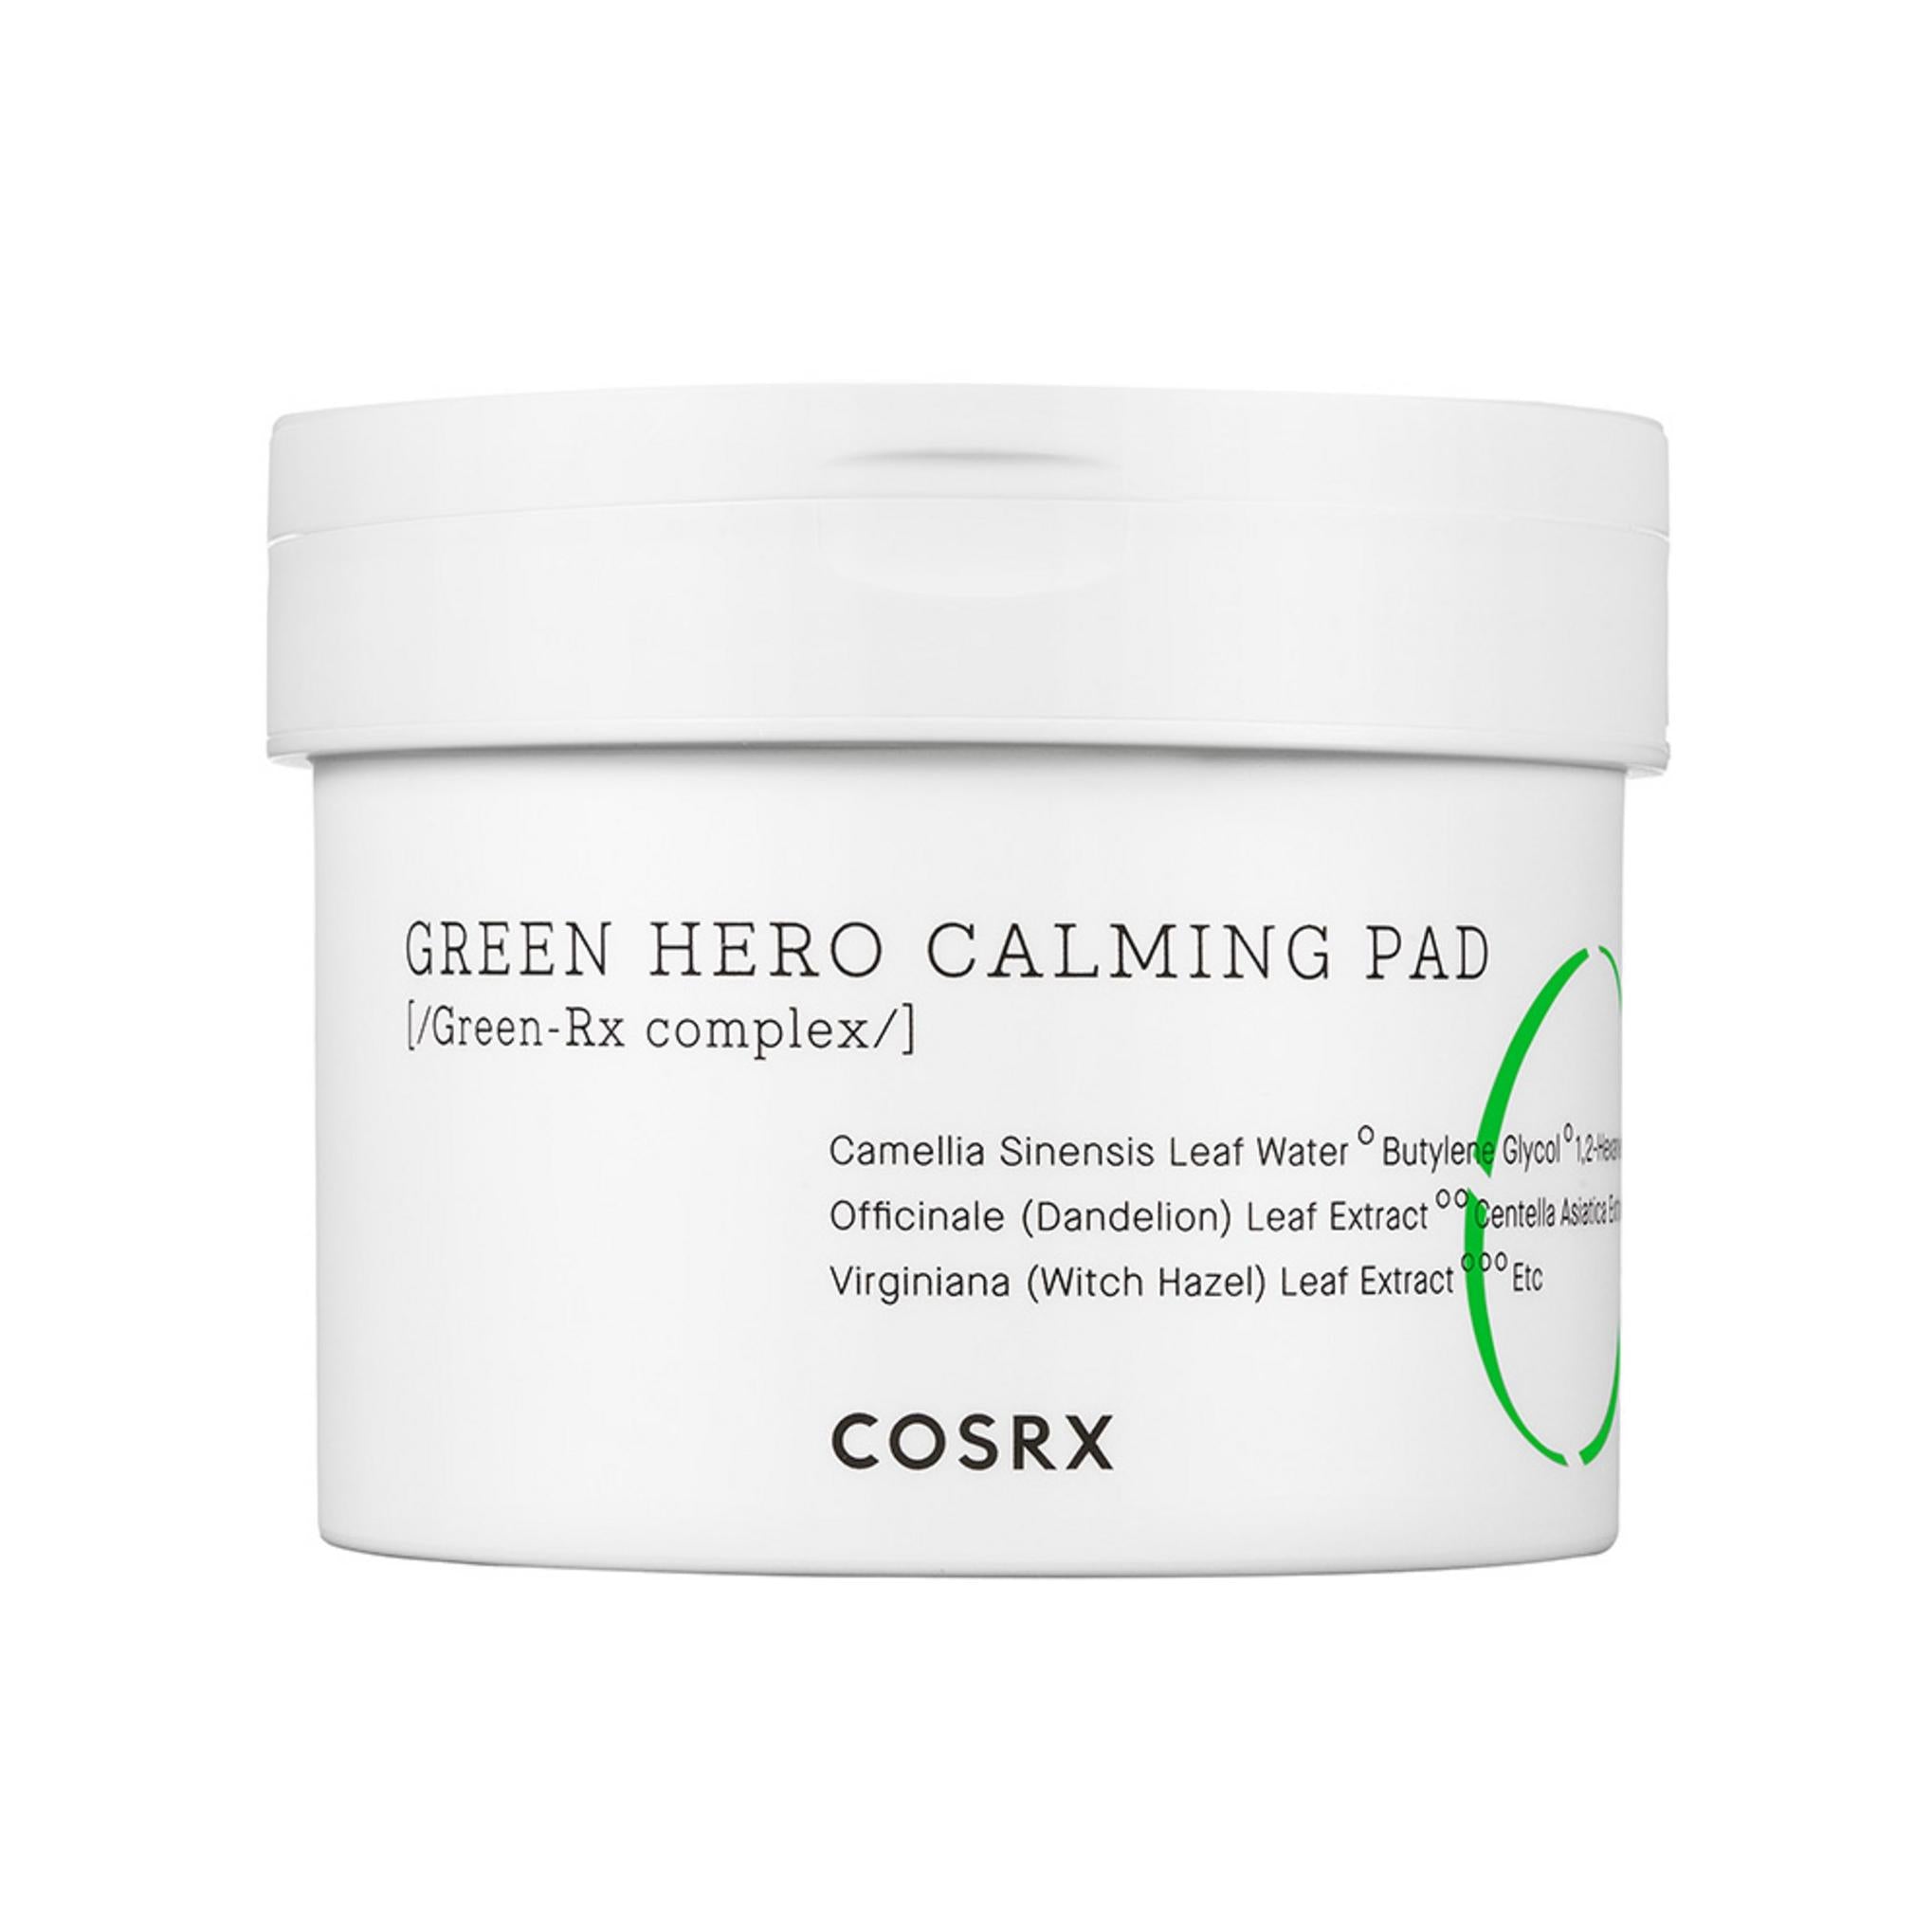 COSRX One-Step Green Hero Calming Pad